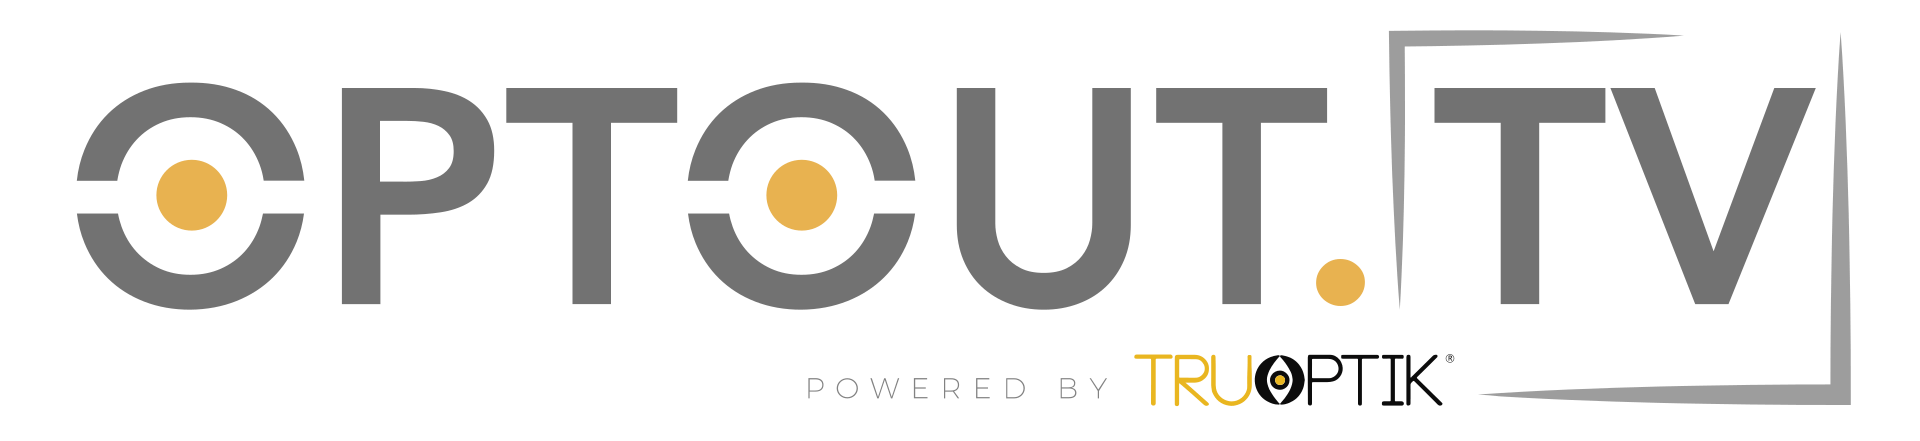 Ott Logo - OTT Marketing Cloud Overview. Tru Optik The Top, Connected